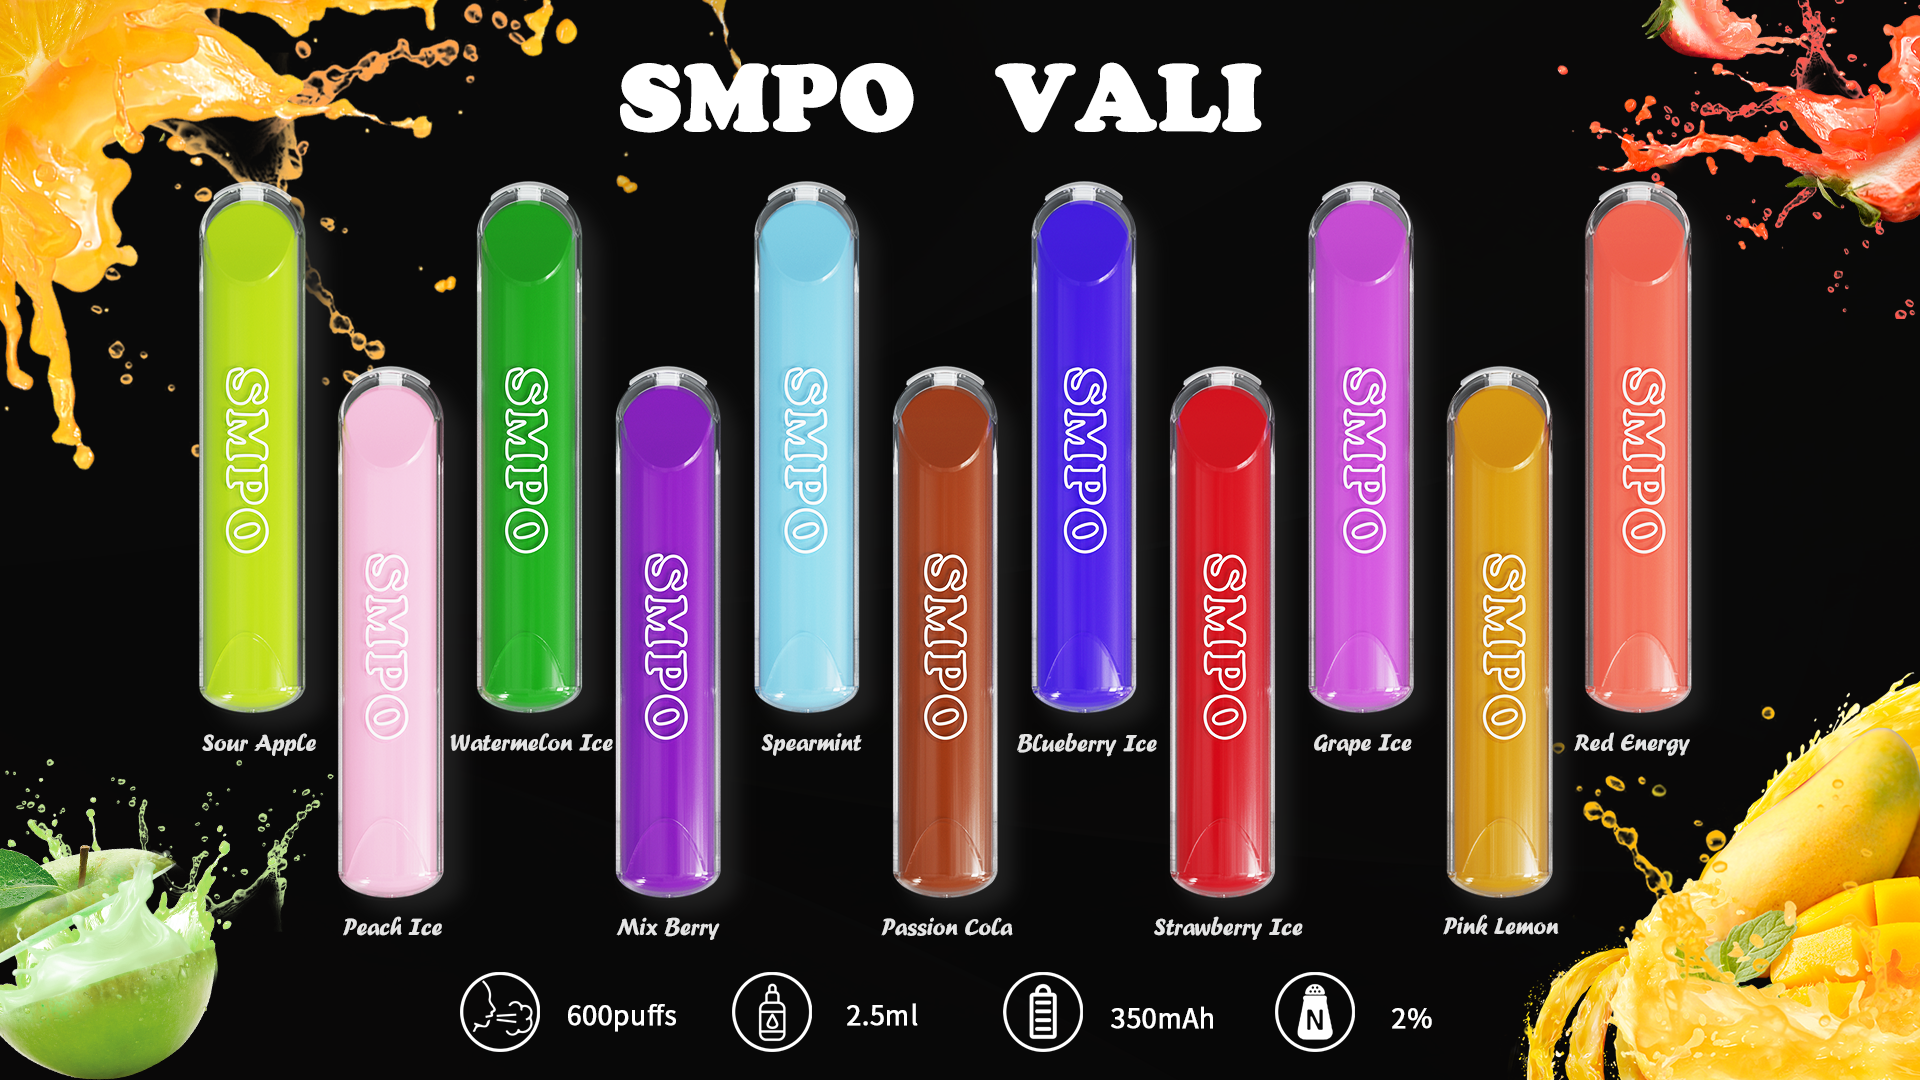 Wholesale SMPO VALI